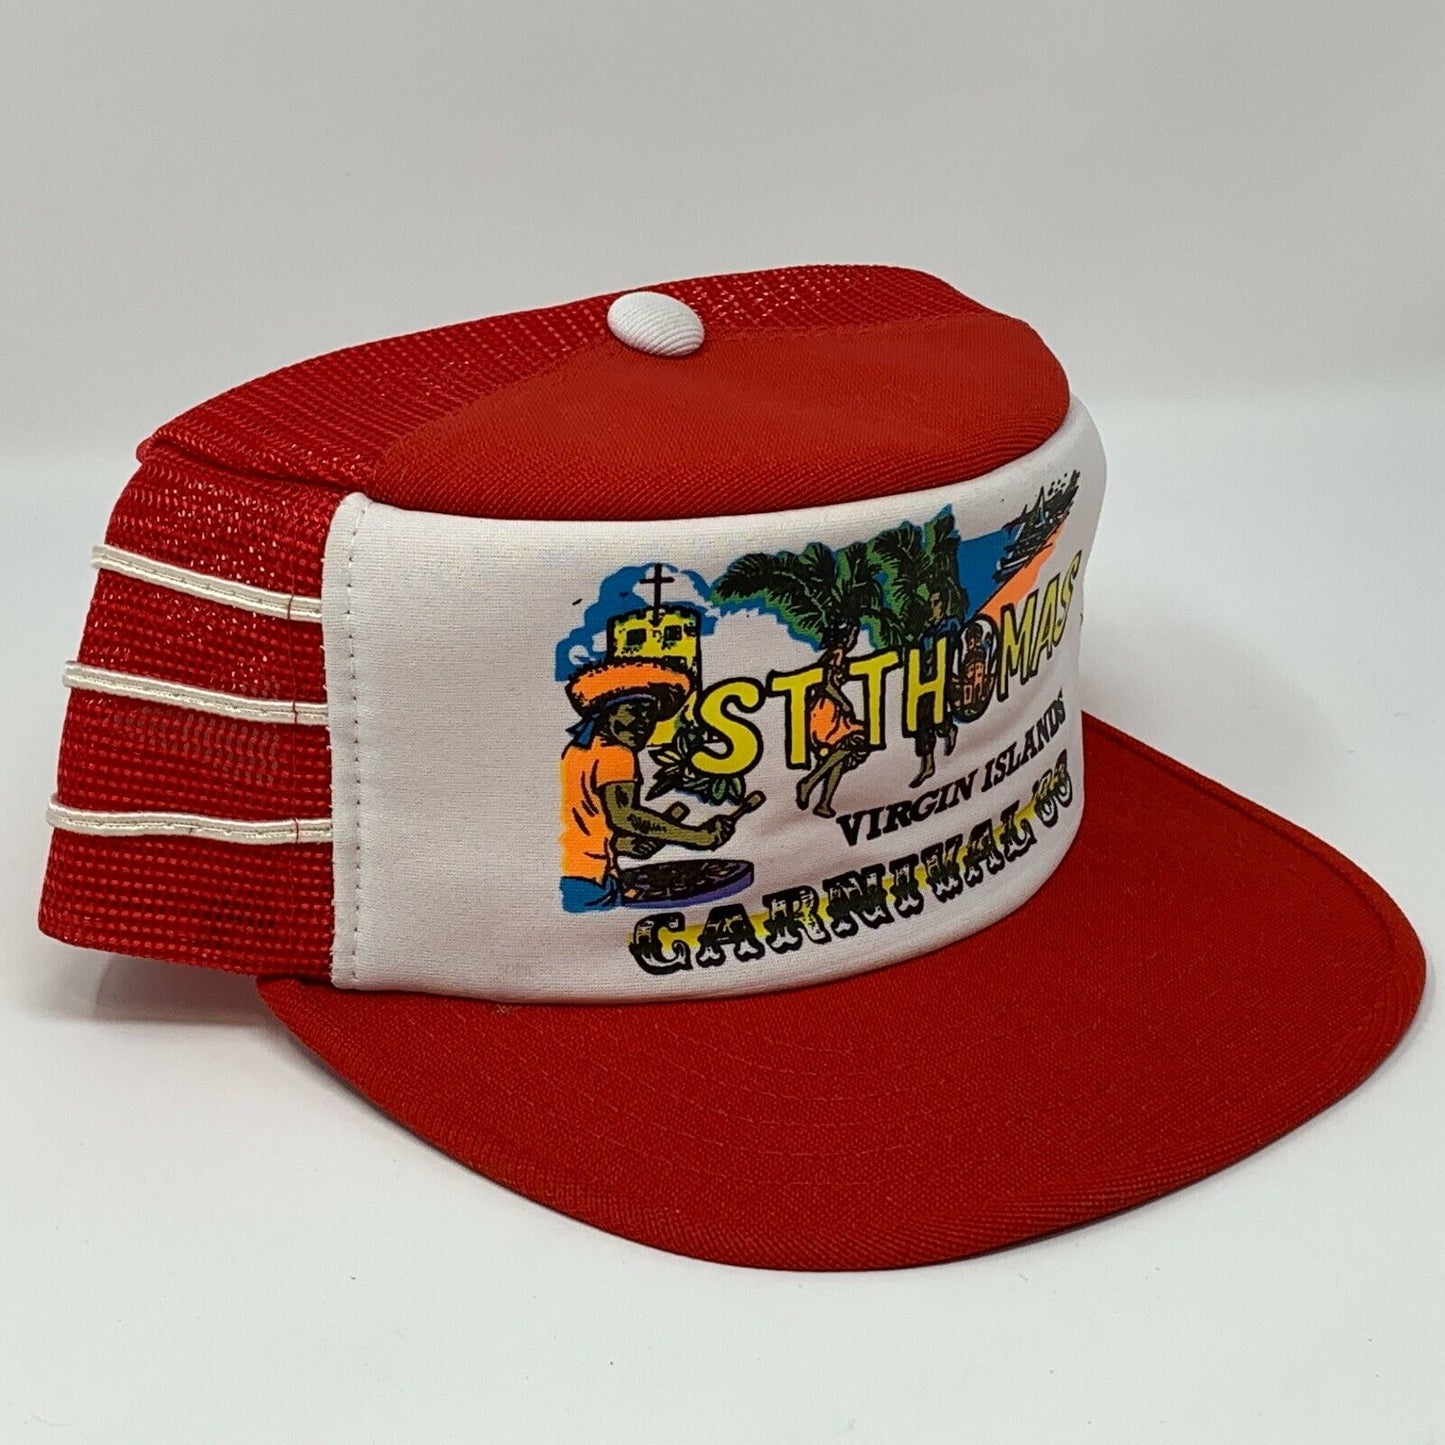 St Thomas Virgin Islands 3 Stripes Snapback Trucker Hat Vintage 80s Mesh Cap